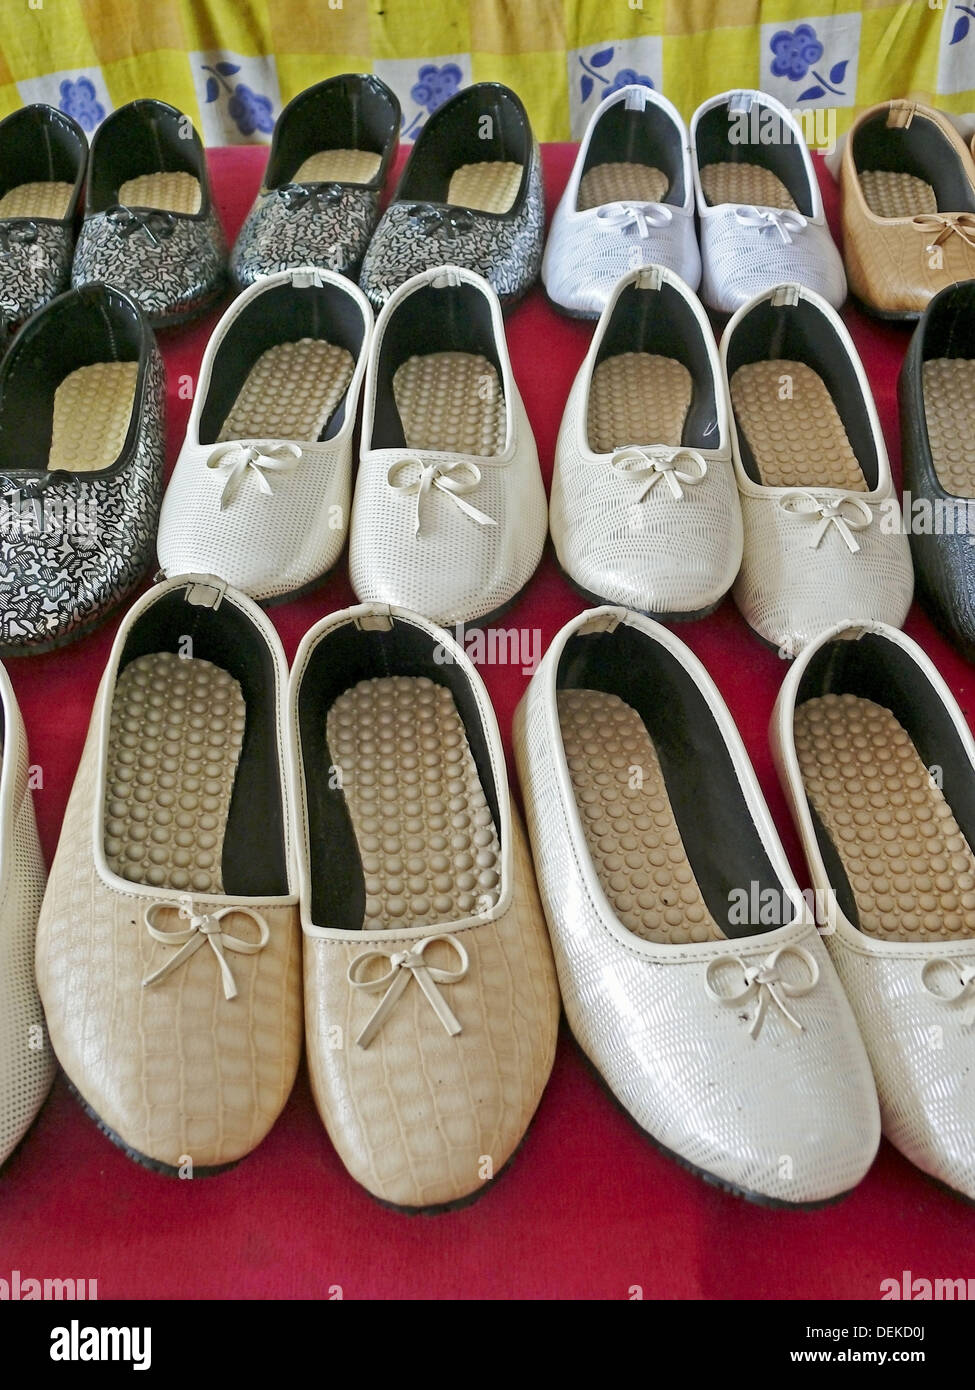 Traditional leather Shoes on display outside a shop Pune, Maharashtra ...